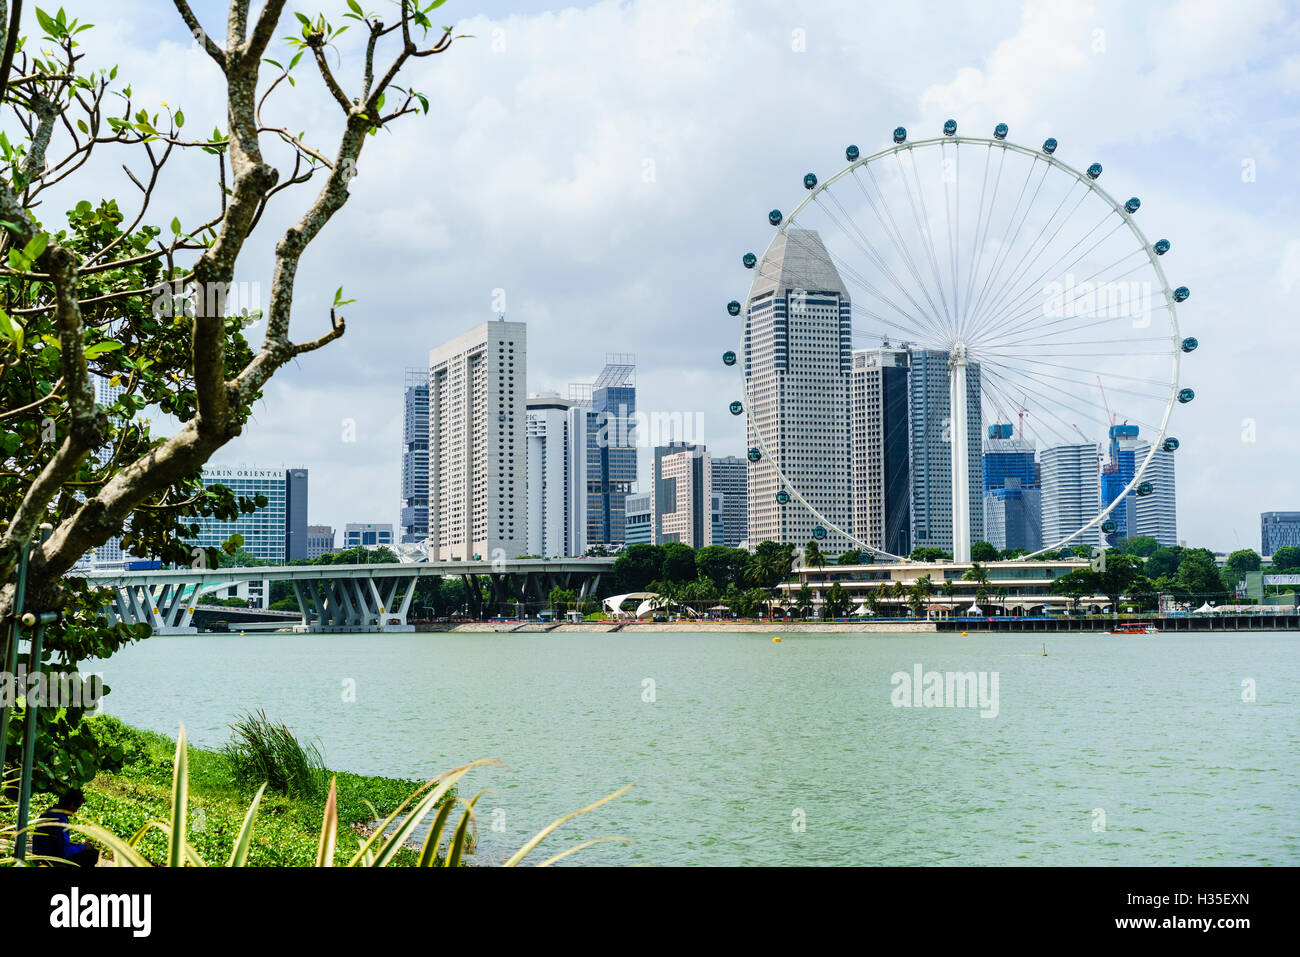 Das Riesenrad Singapore Flyer, Marina Bay, Singapur Stockfoto